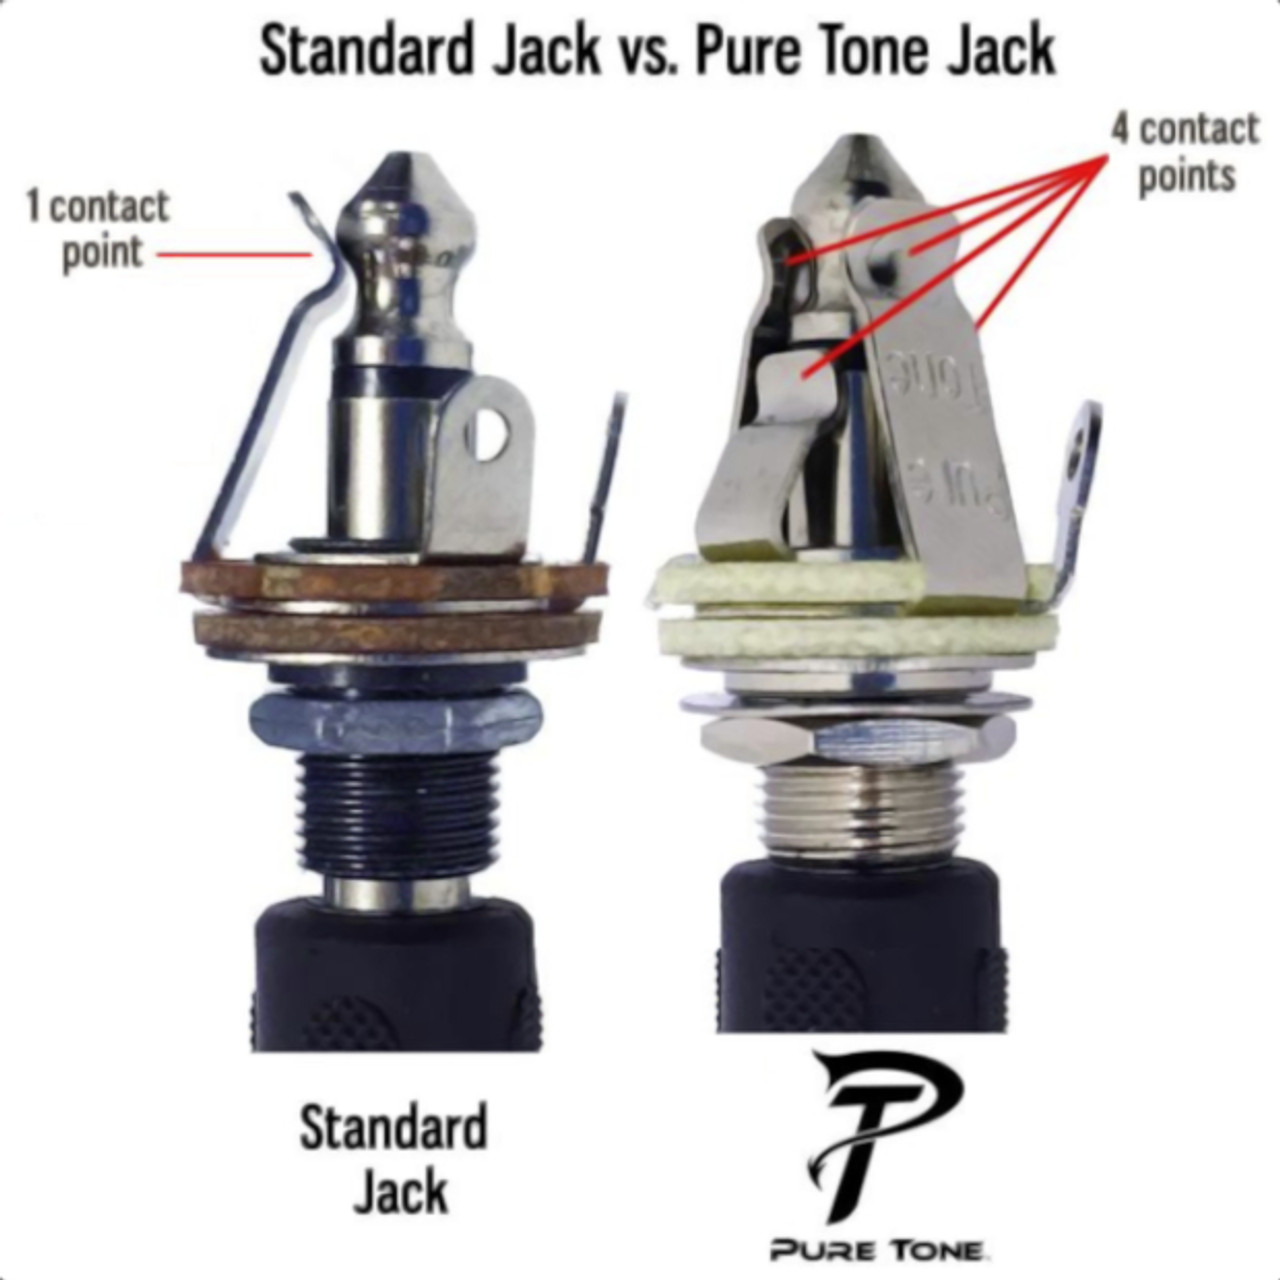 Pure Tone Muti-Contact 1/4" Jack vs Standard Jack